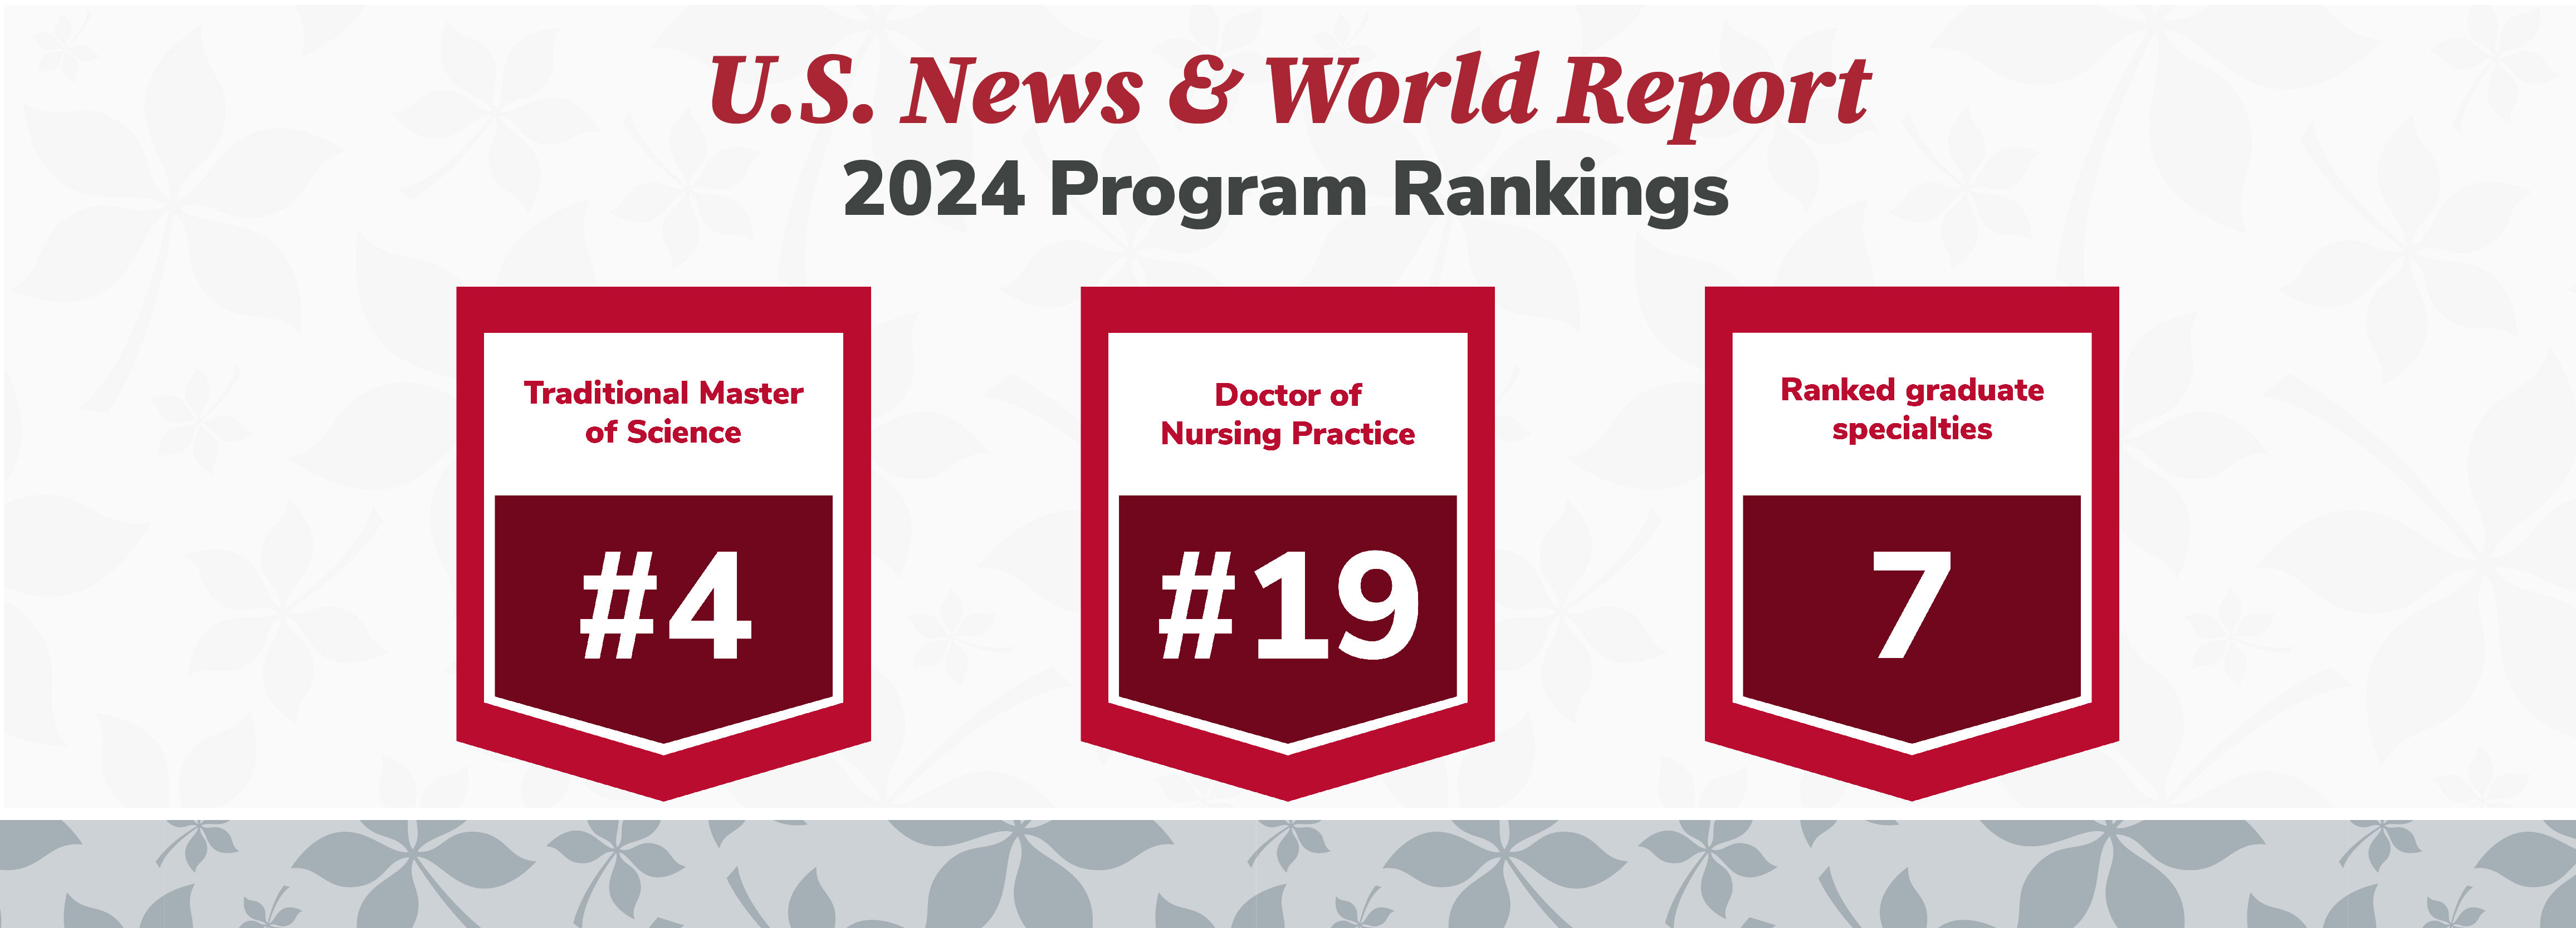 US News & World Report 2024 Program Rankings